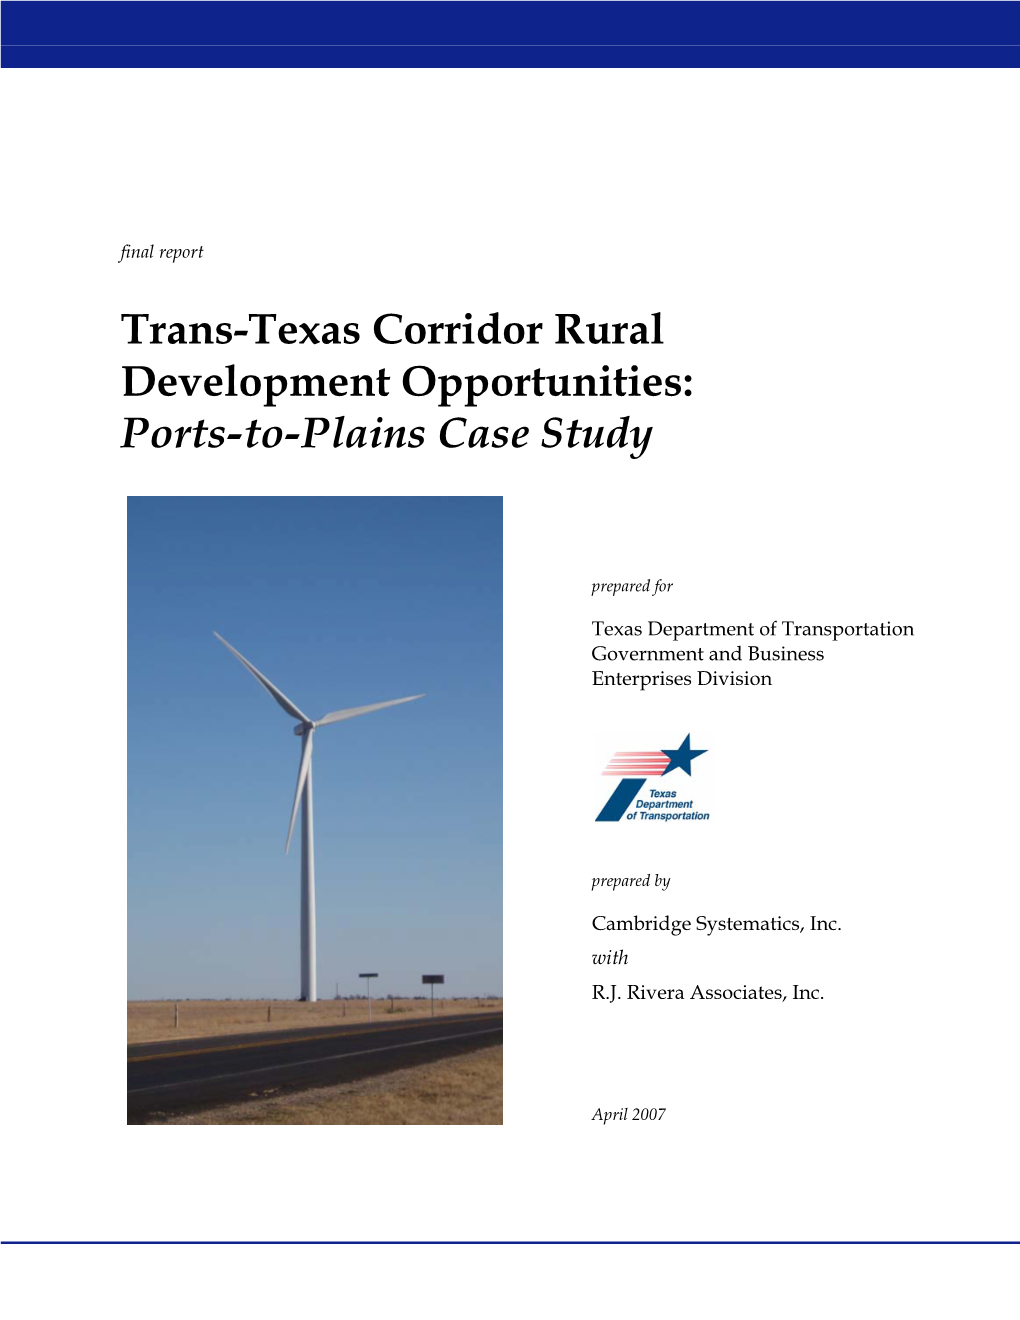 Trans-Texas Corridor Rural Development Opportunities: Ports-To-Plains Case Study